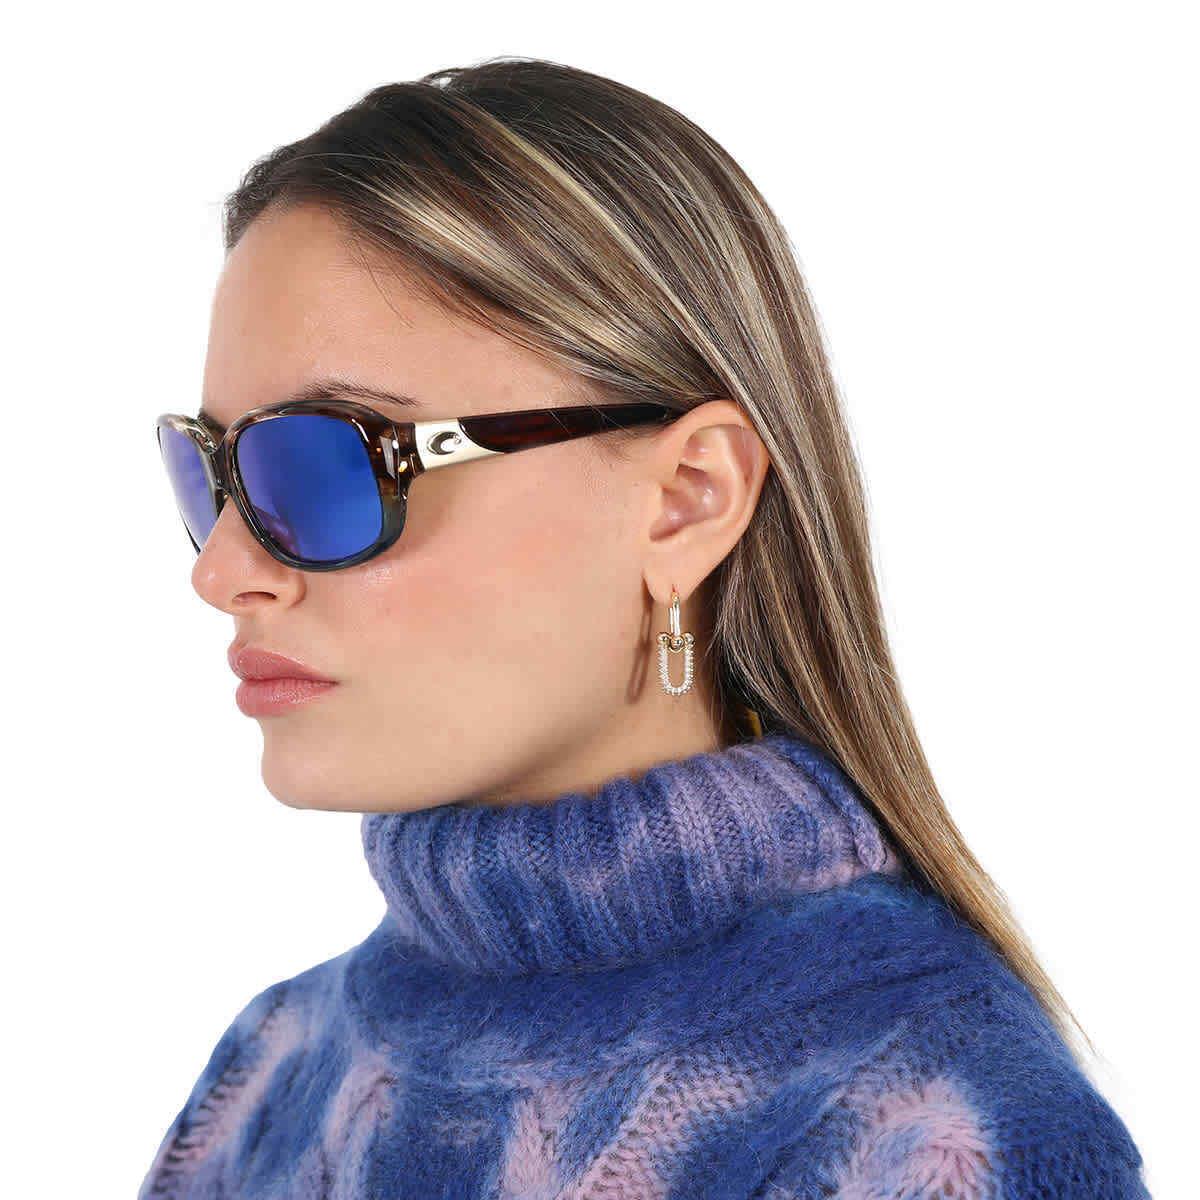 Costa Del Mar Gannet Blue Mirror Polarized Glass Ladies Sunglasses Gnt 251 - Frame: Blue, Lens: Blue